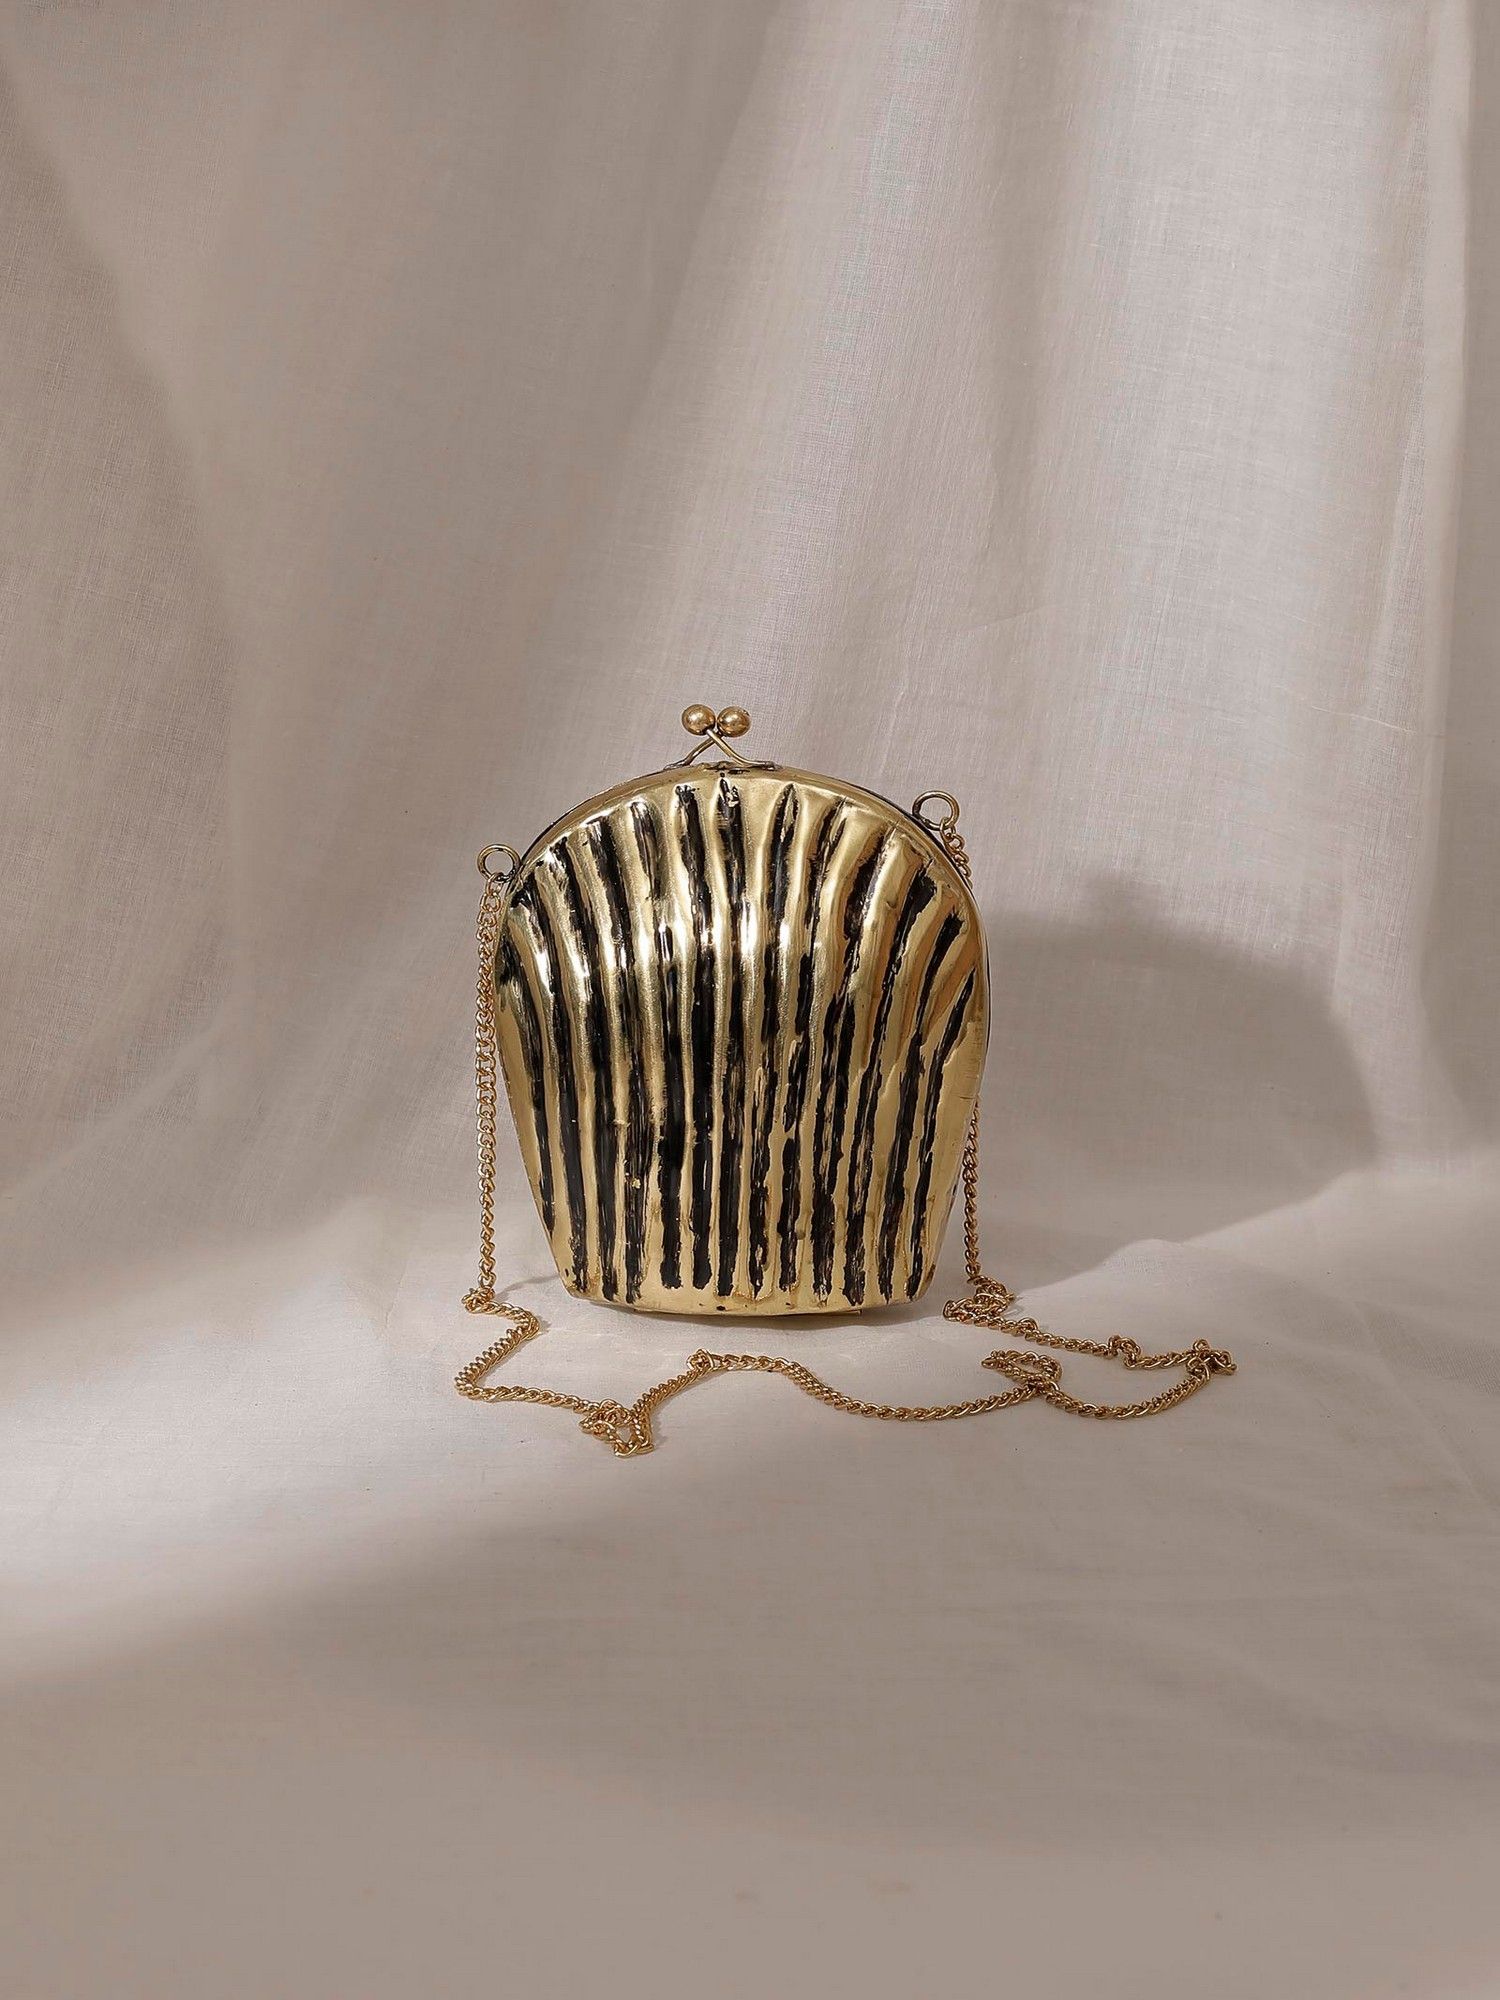 Real Nautilus Sea Shell coin purse, Handcrafted Mermaid beach bag | eBay